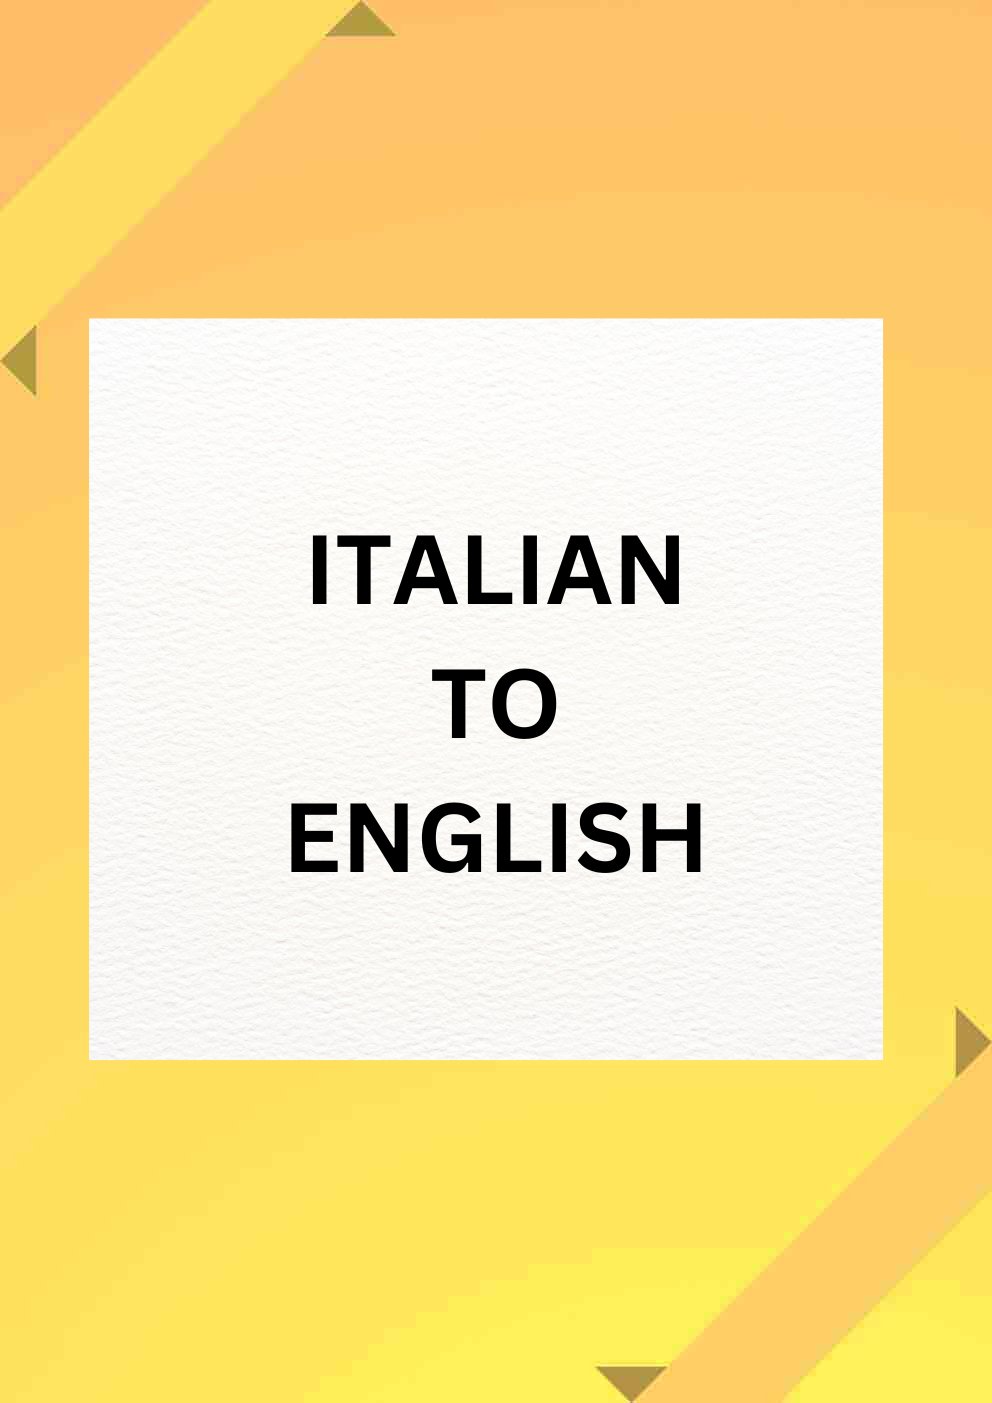 Document translation italian to english [Birth Marriage Degree]